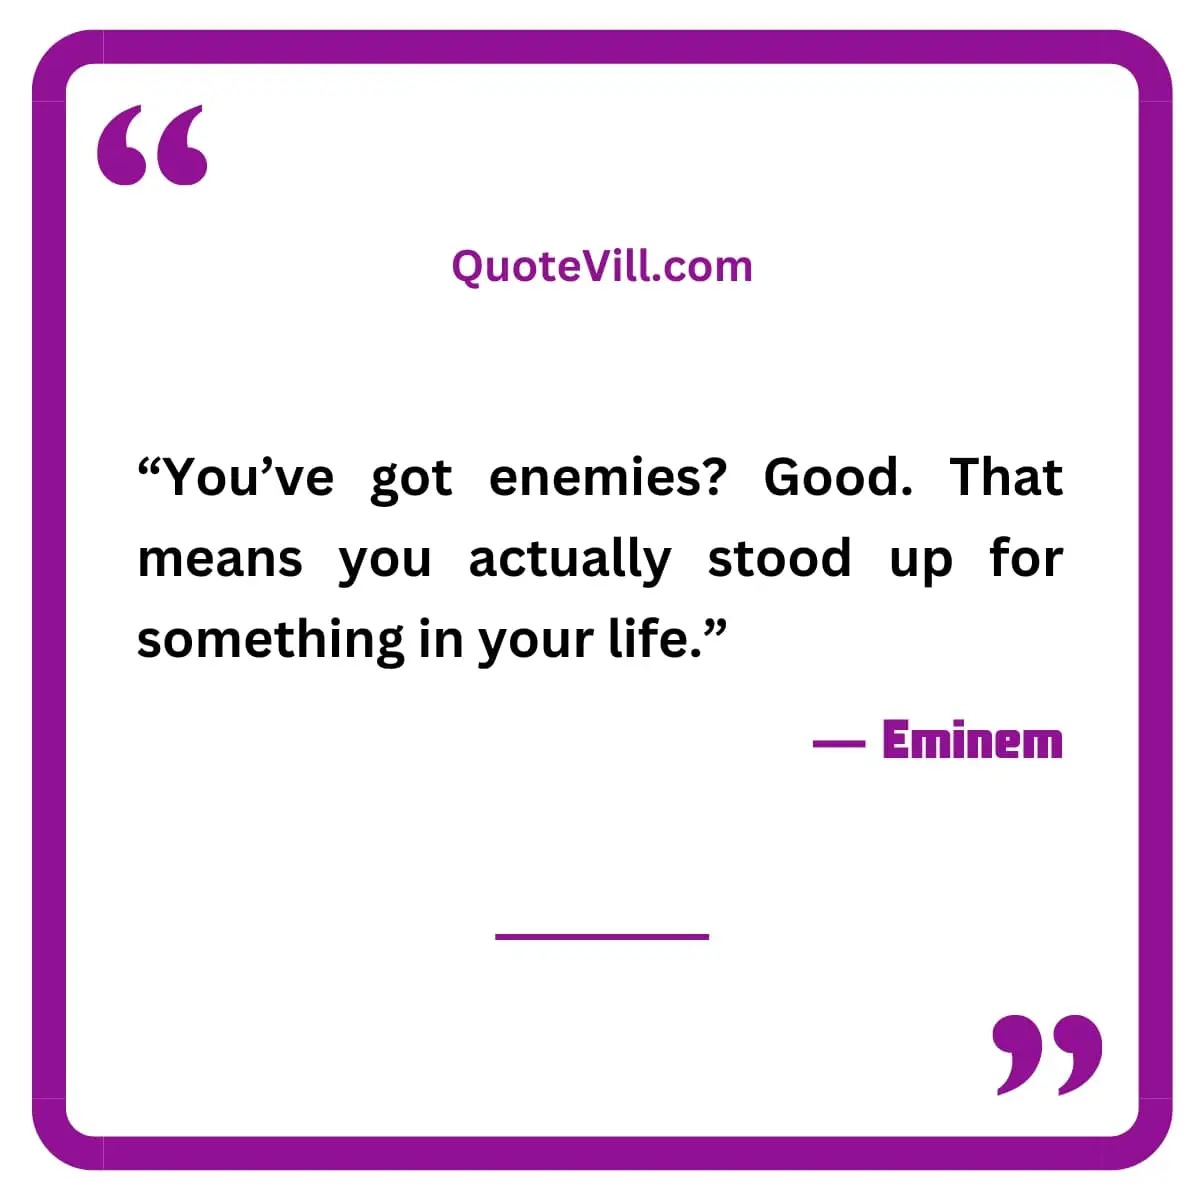 Eminem Quotes on Life 